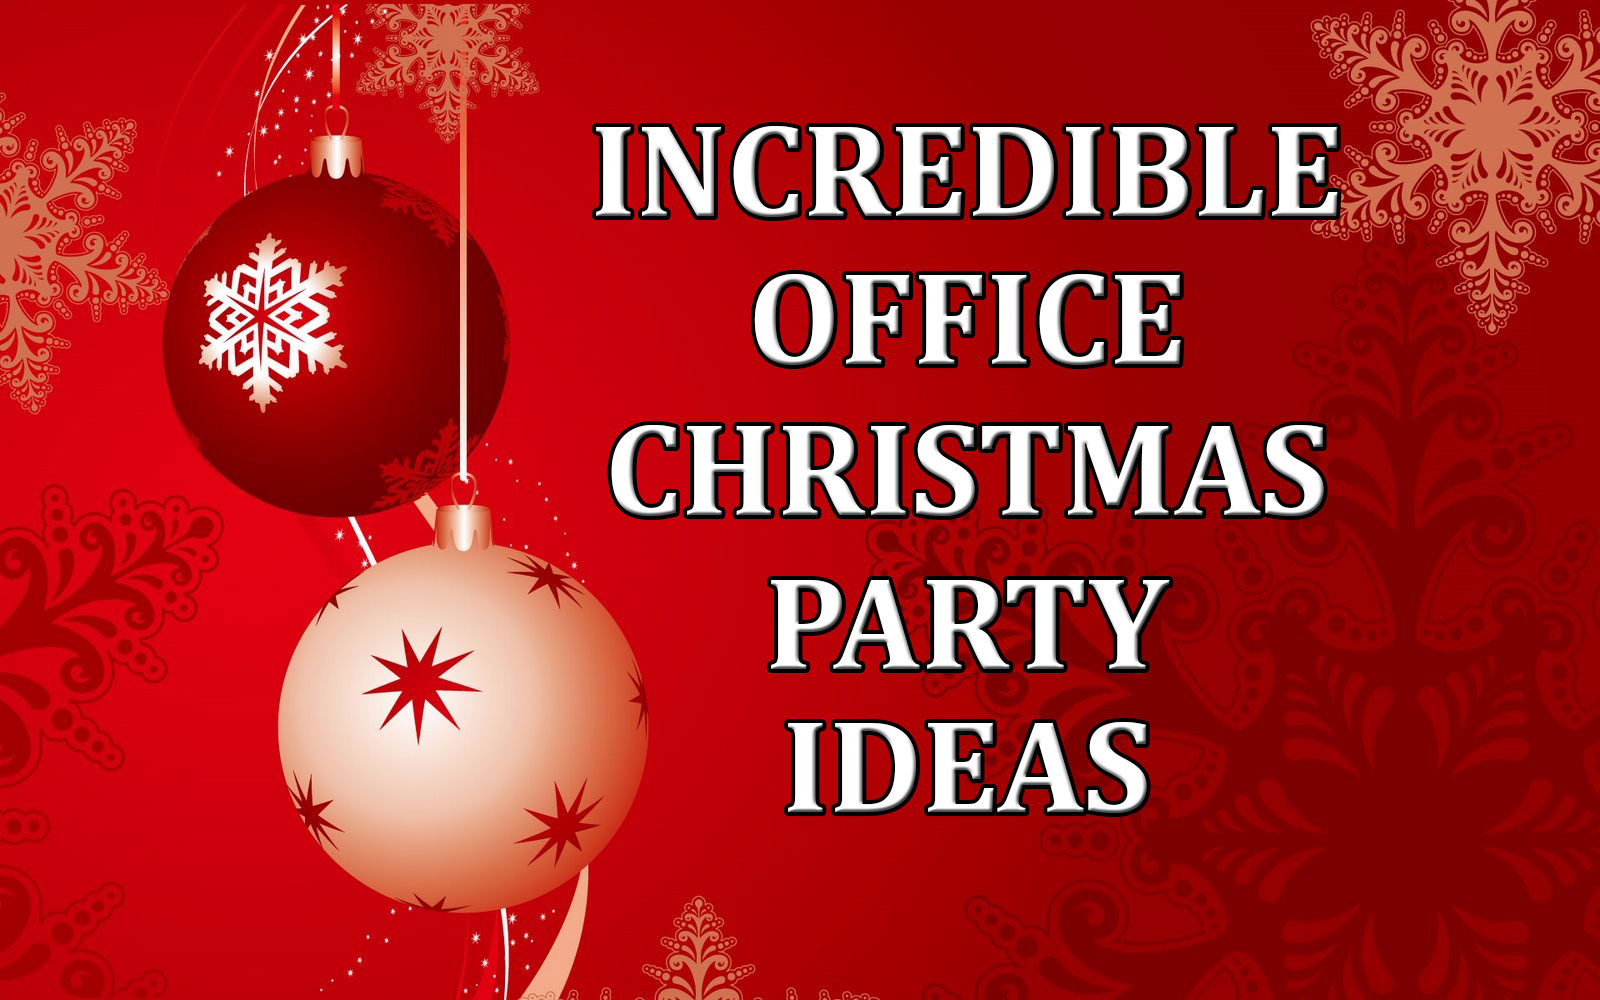 Employee Christmas Party Ideas
 Incredible fice Christmas Party Ideas edy Ventriloquist